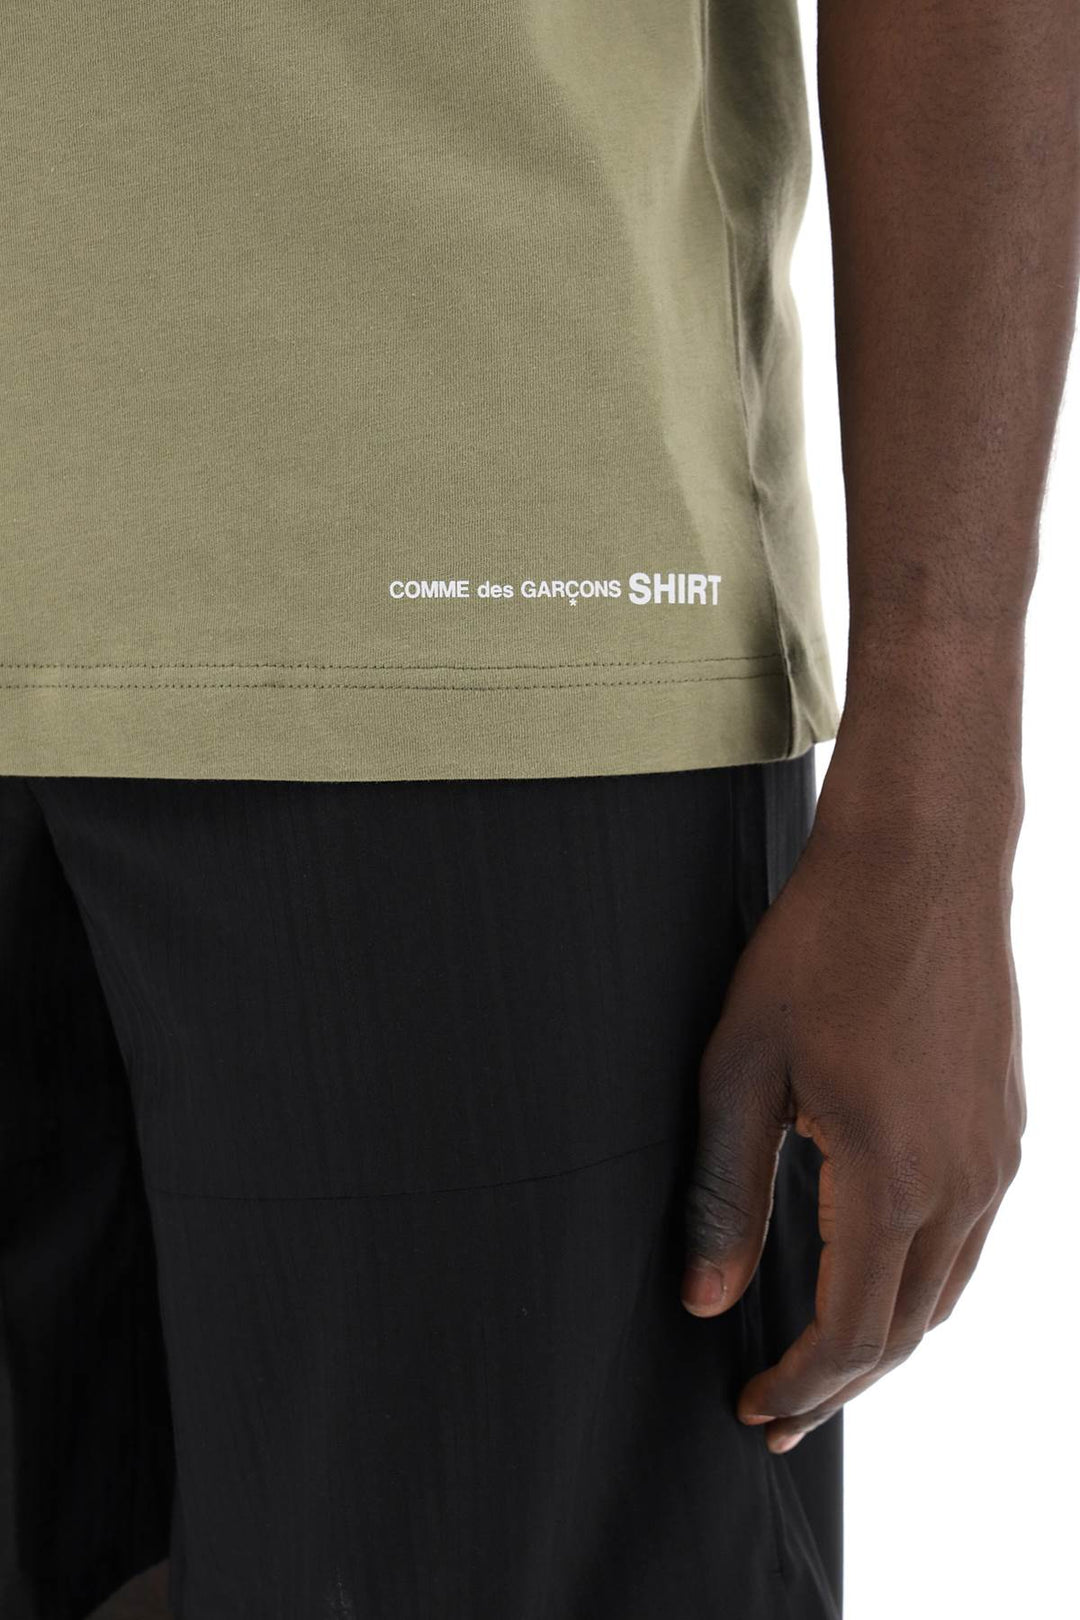 Comme Des Garcons Shirt Logo Print T Shirt   Khaki